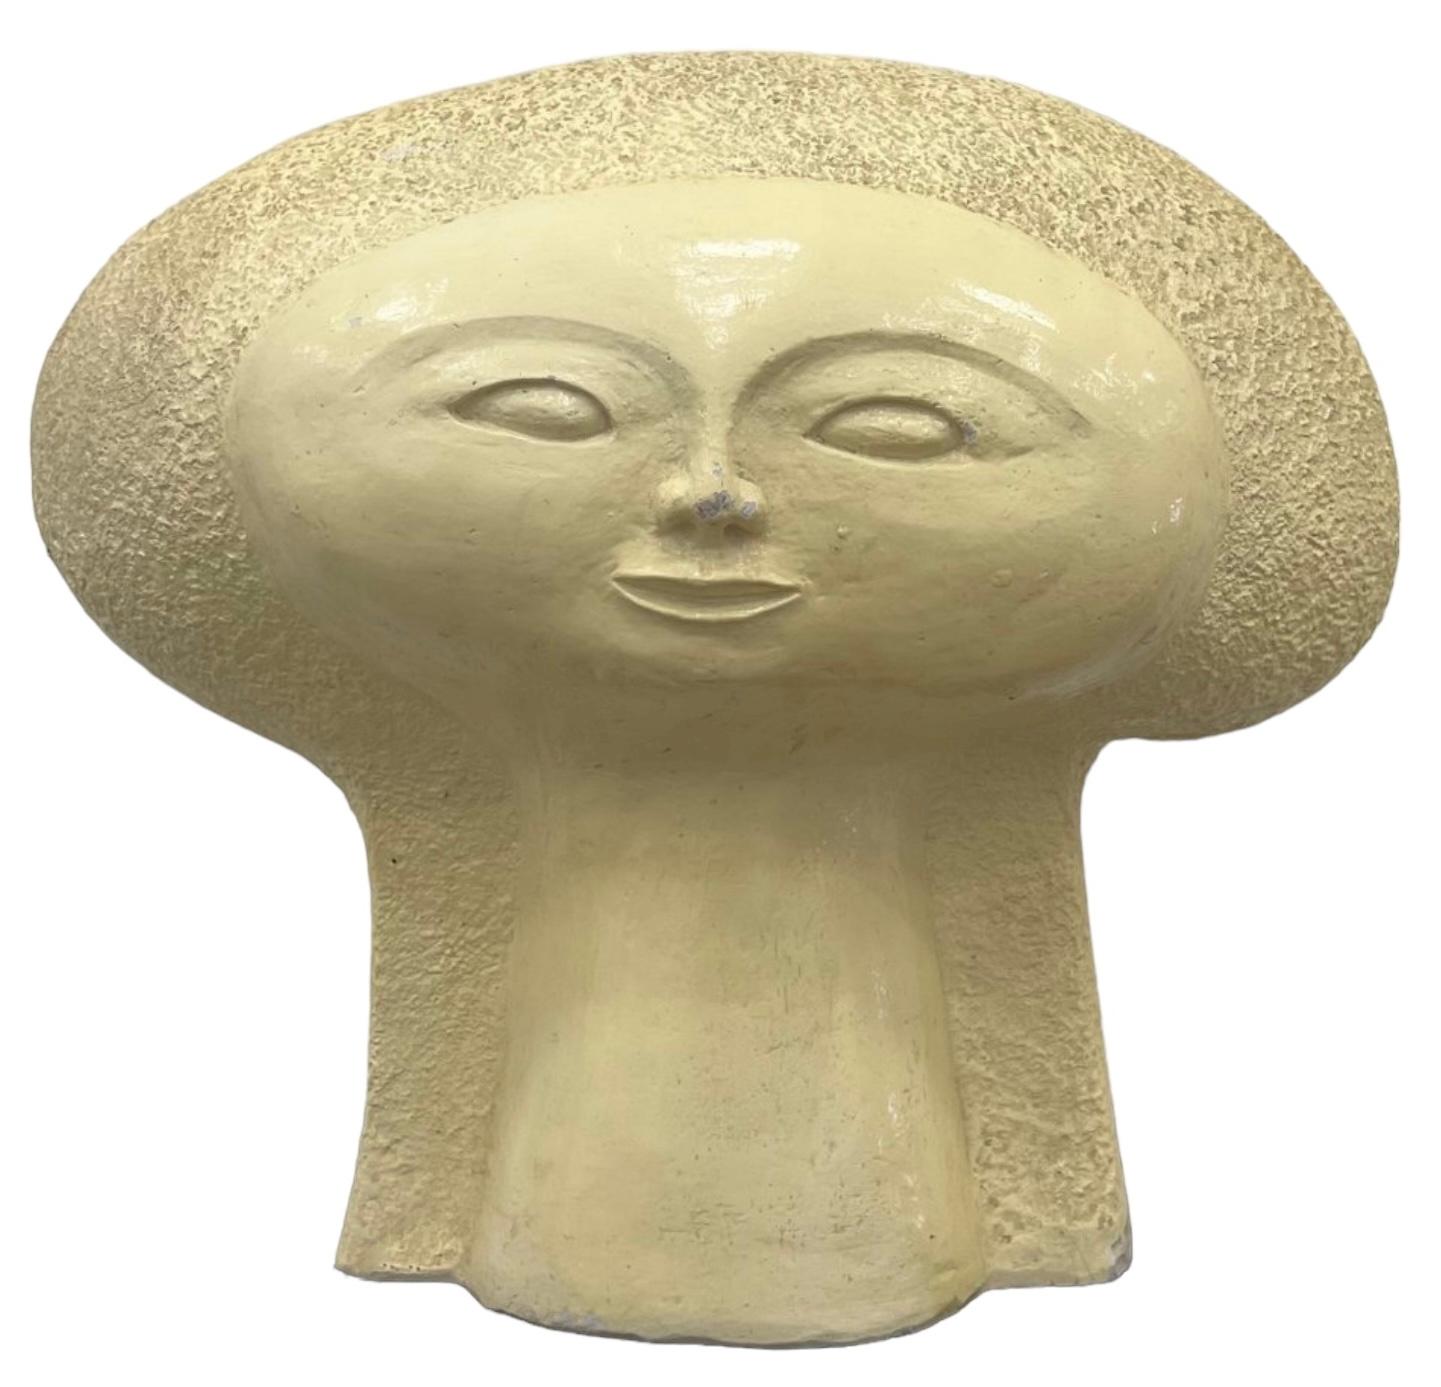 20th Century Mid-Century Modern 1960s Ceramic Bust By Paul Bellardo For Austin (1924-2017) For Sale